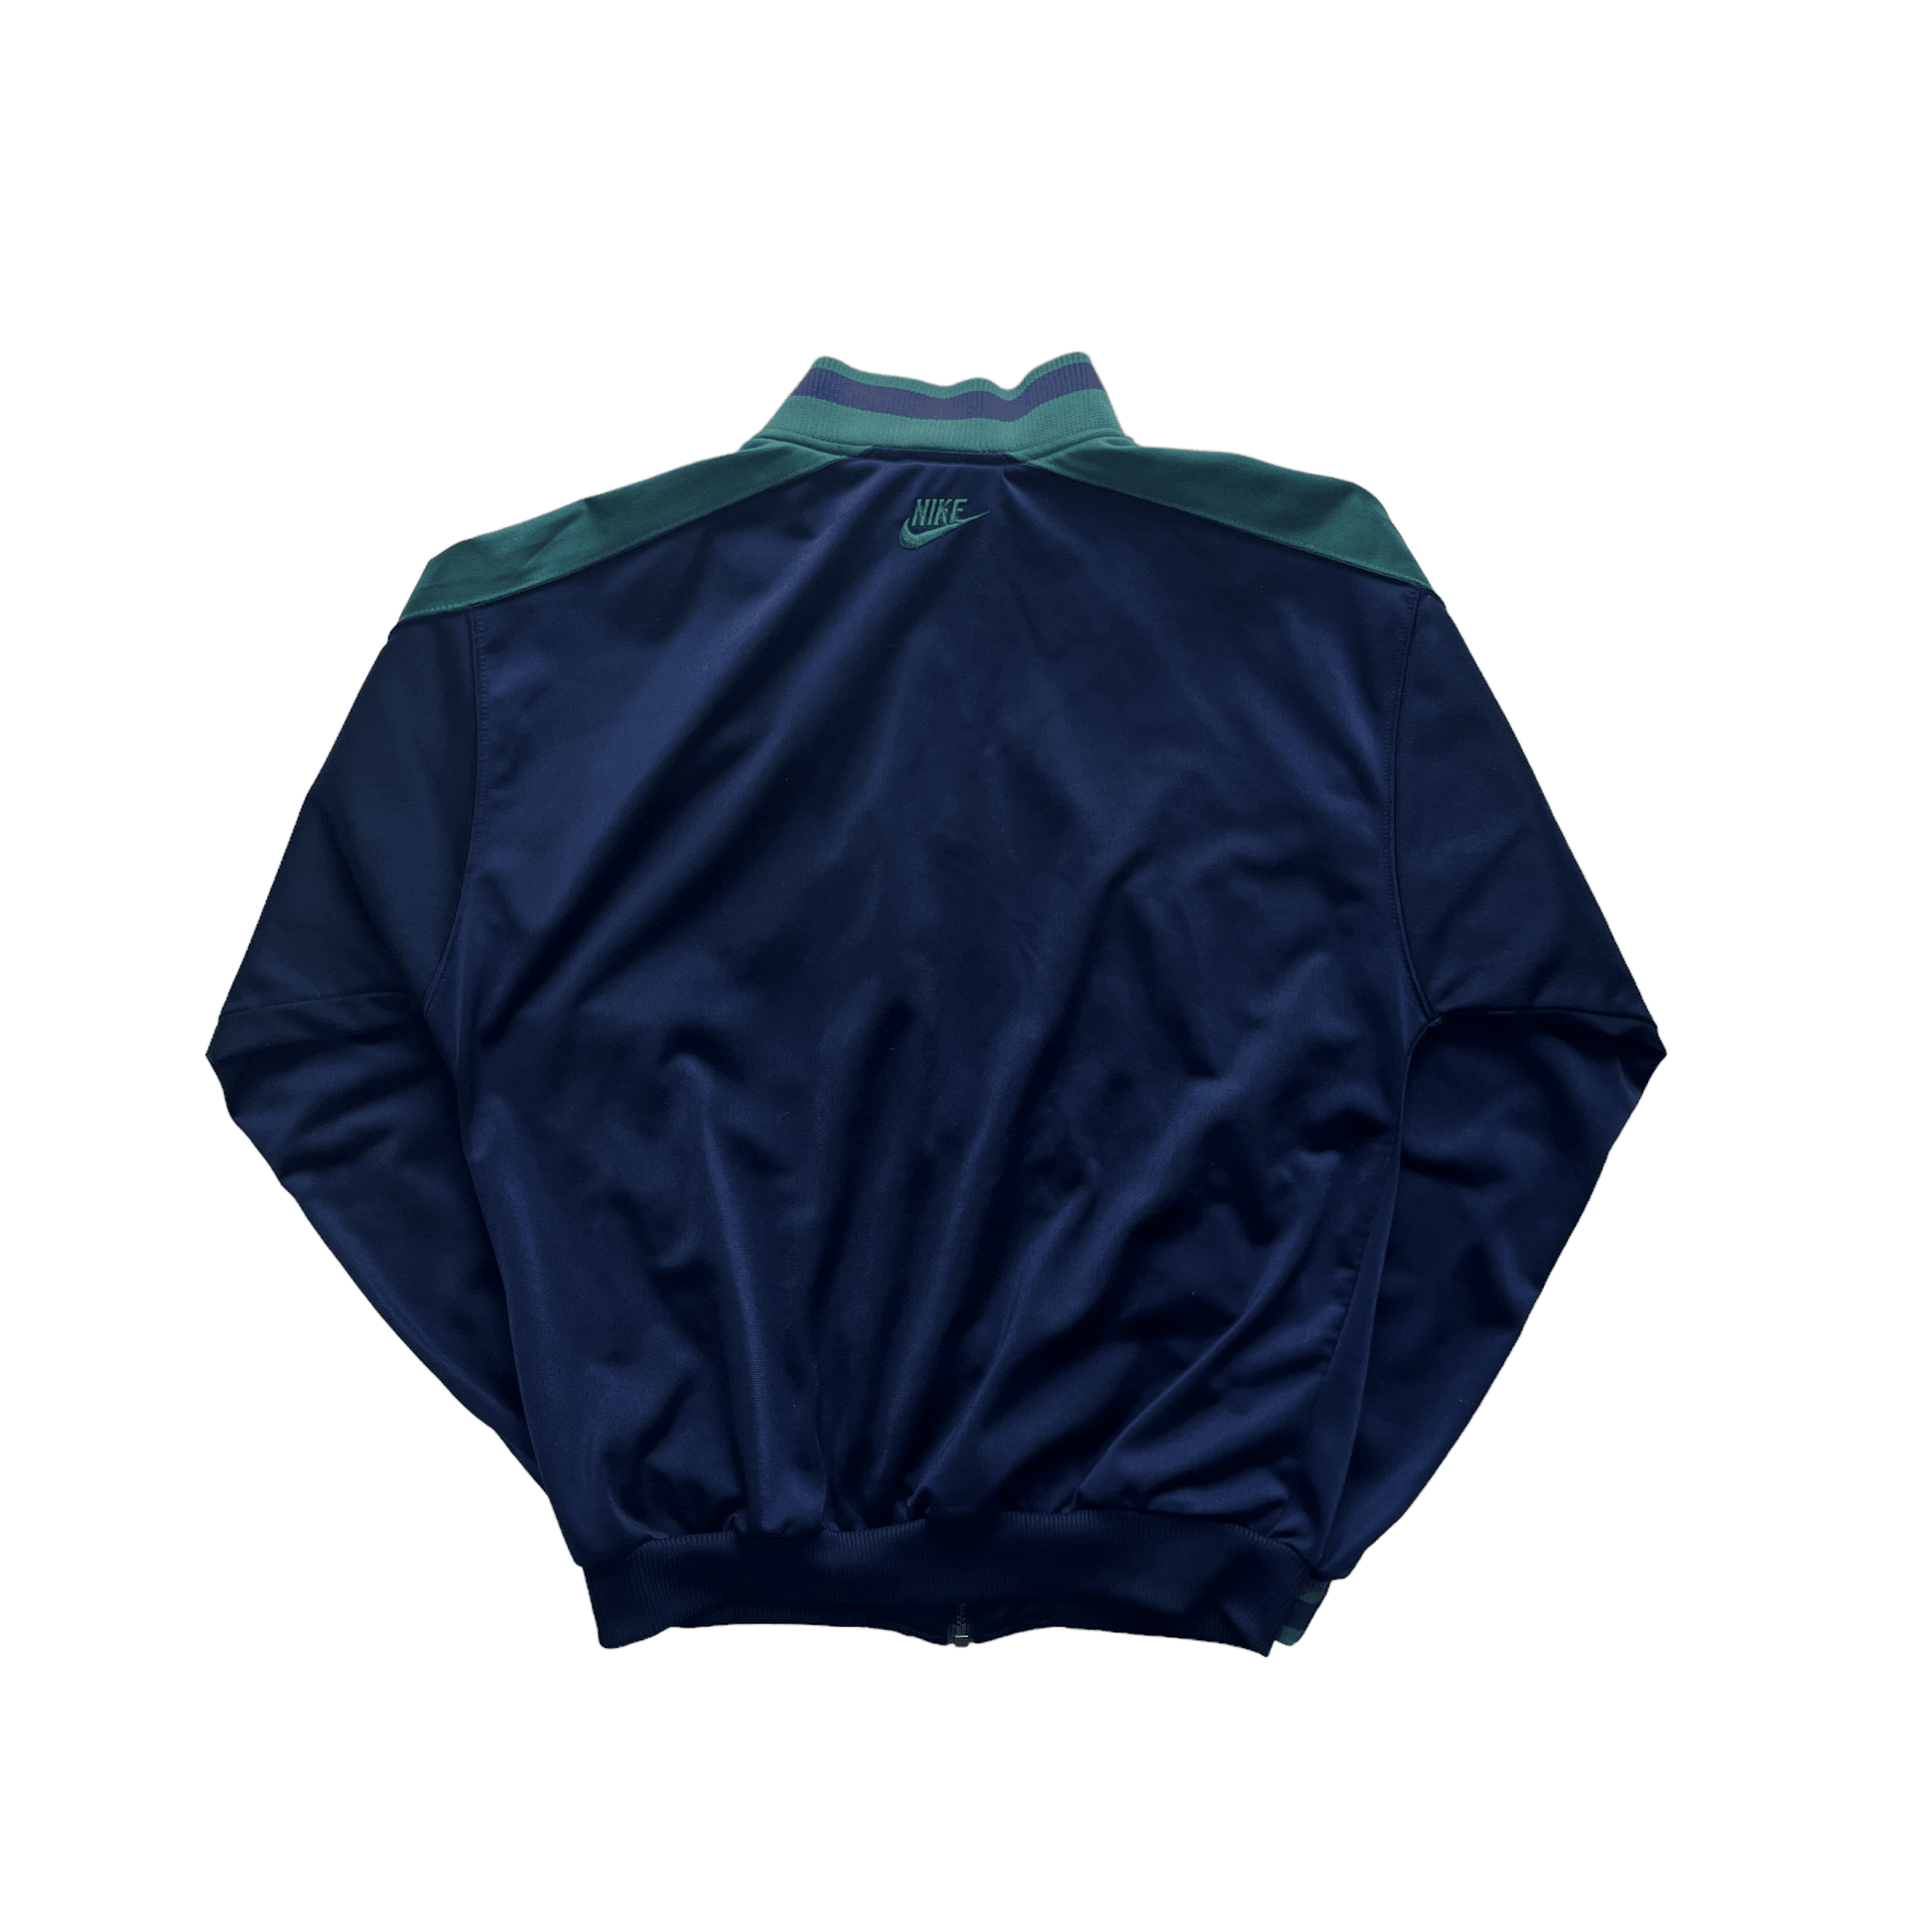 Vintage 90s Navy Blue + Green Nike Track Jacket - Medium - The Streetwear Studio